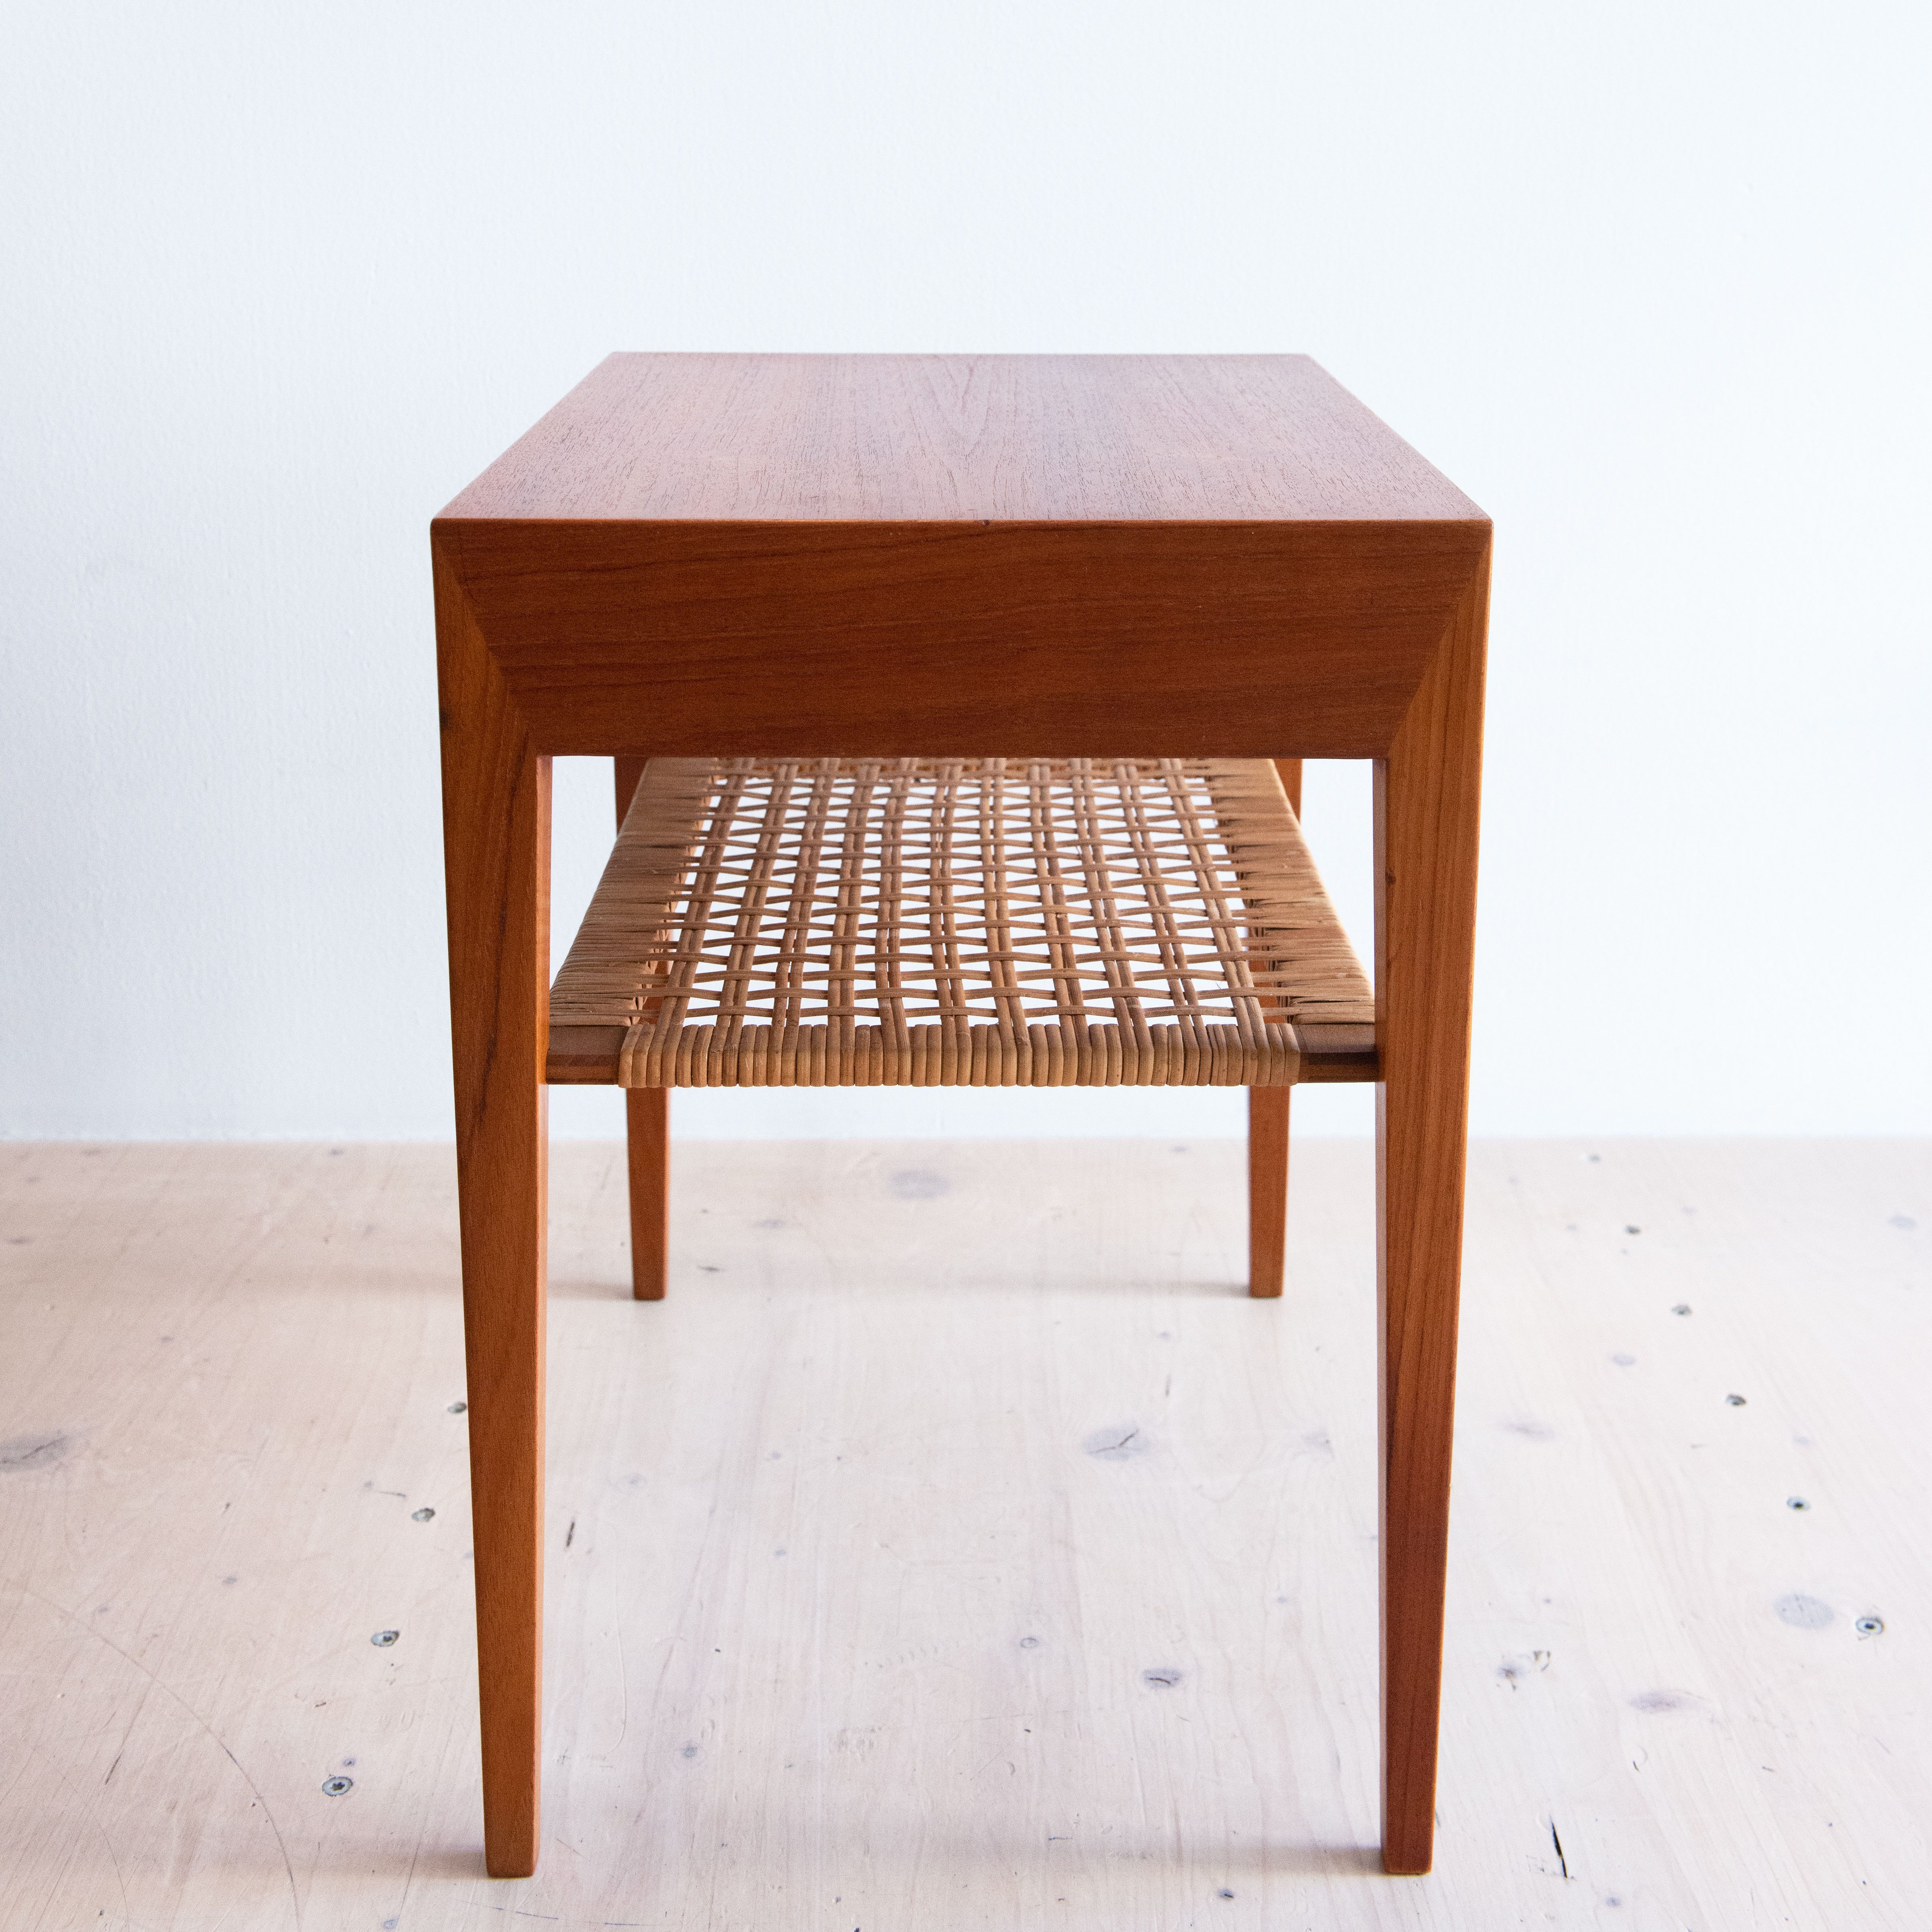 Severin Hansen Side Table with Drawer. Made in Denmark in the 1960s. Available at heyday möbel, Grubenstrasse  19, 8045 Zürich, Switzerland.